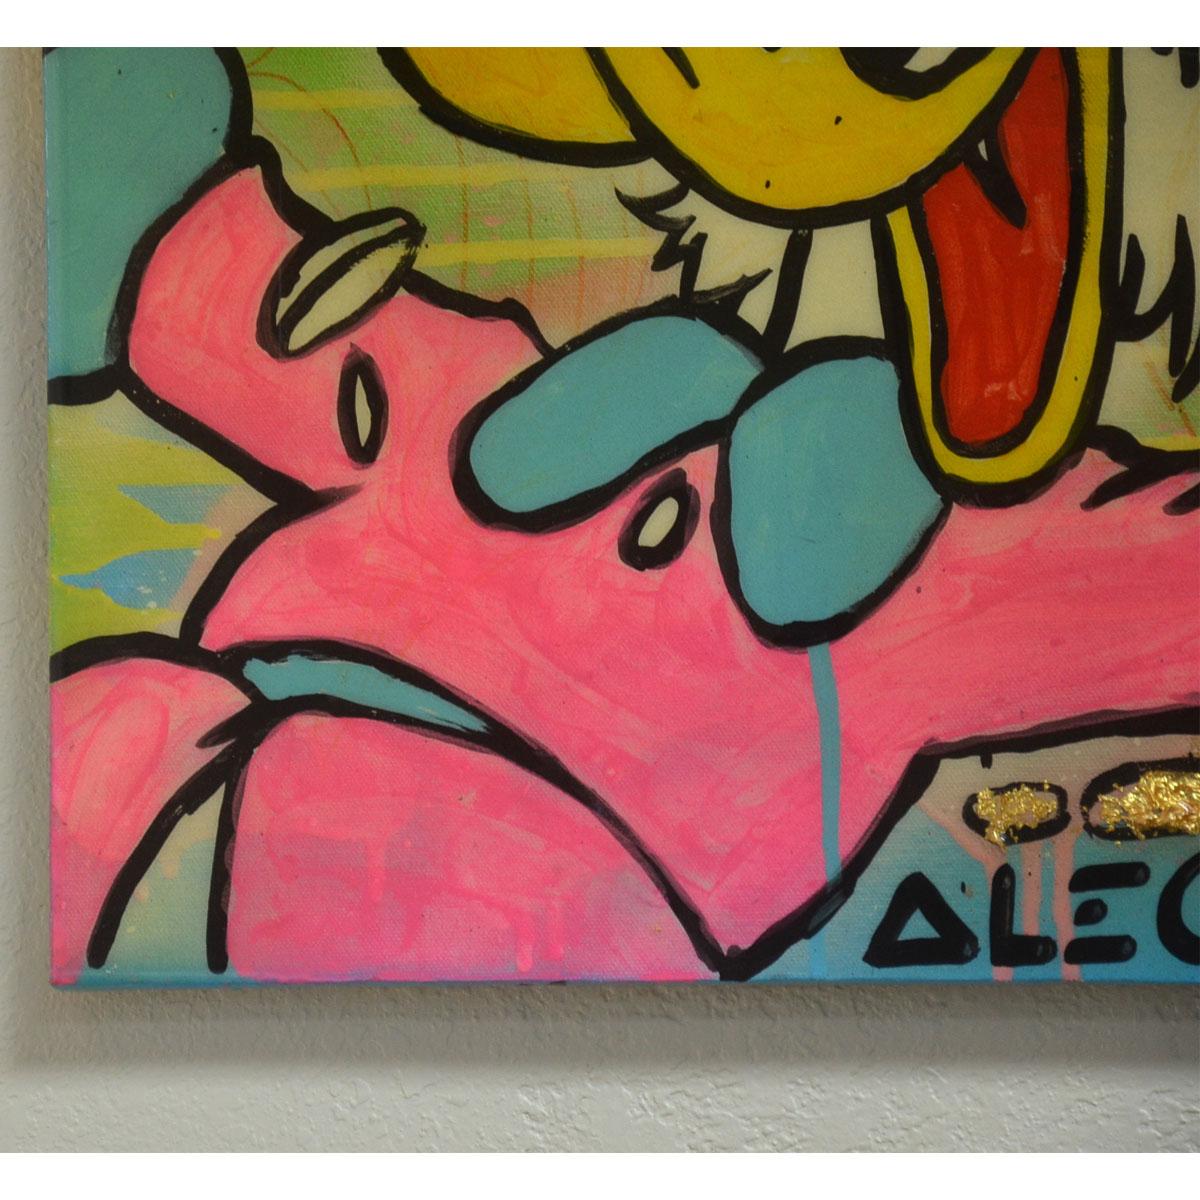 Artist  - Alec Monopoly 
Name of Piece - 